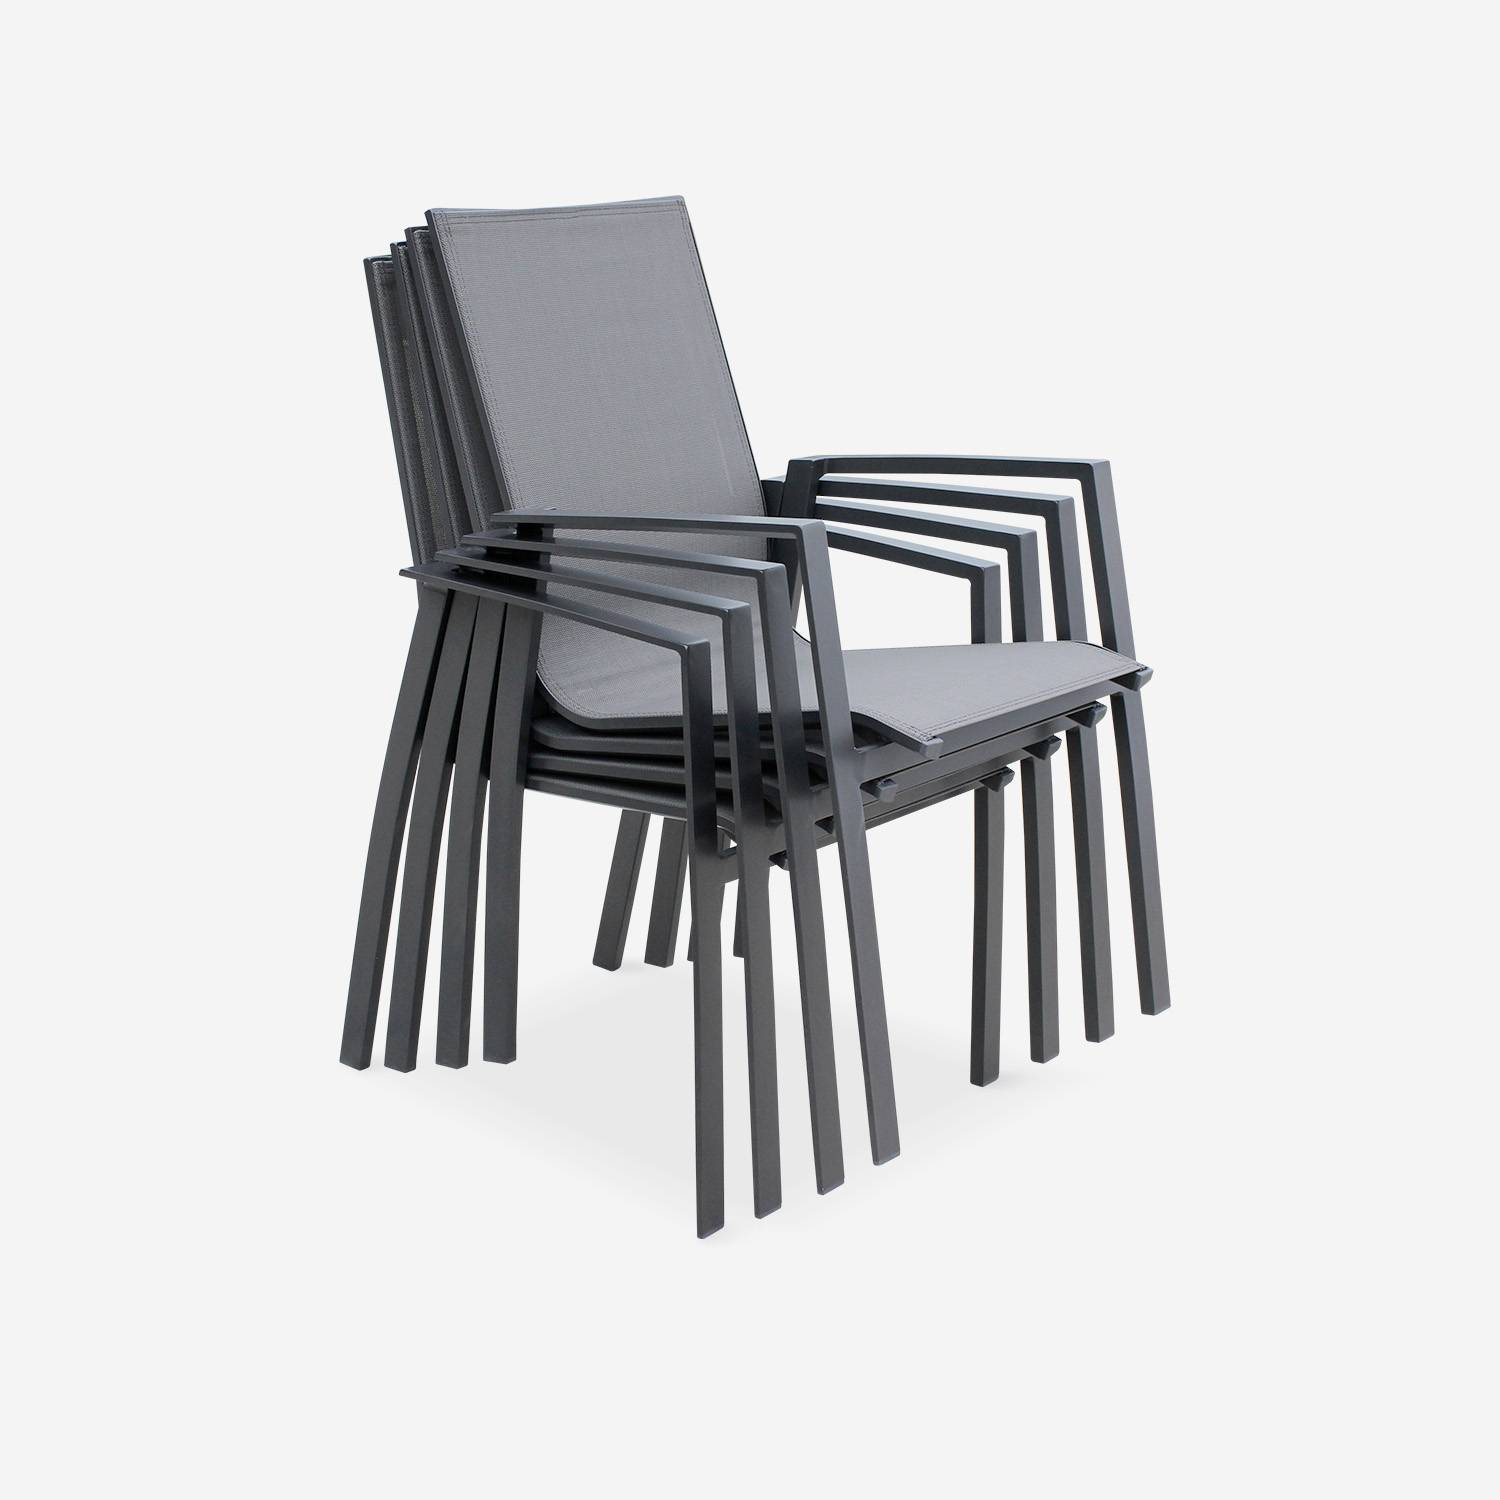 Juego de 2 sillas - Washington - Aluminio antracita y textileno gris oscuro, apilables Photo3